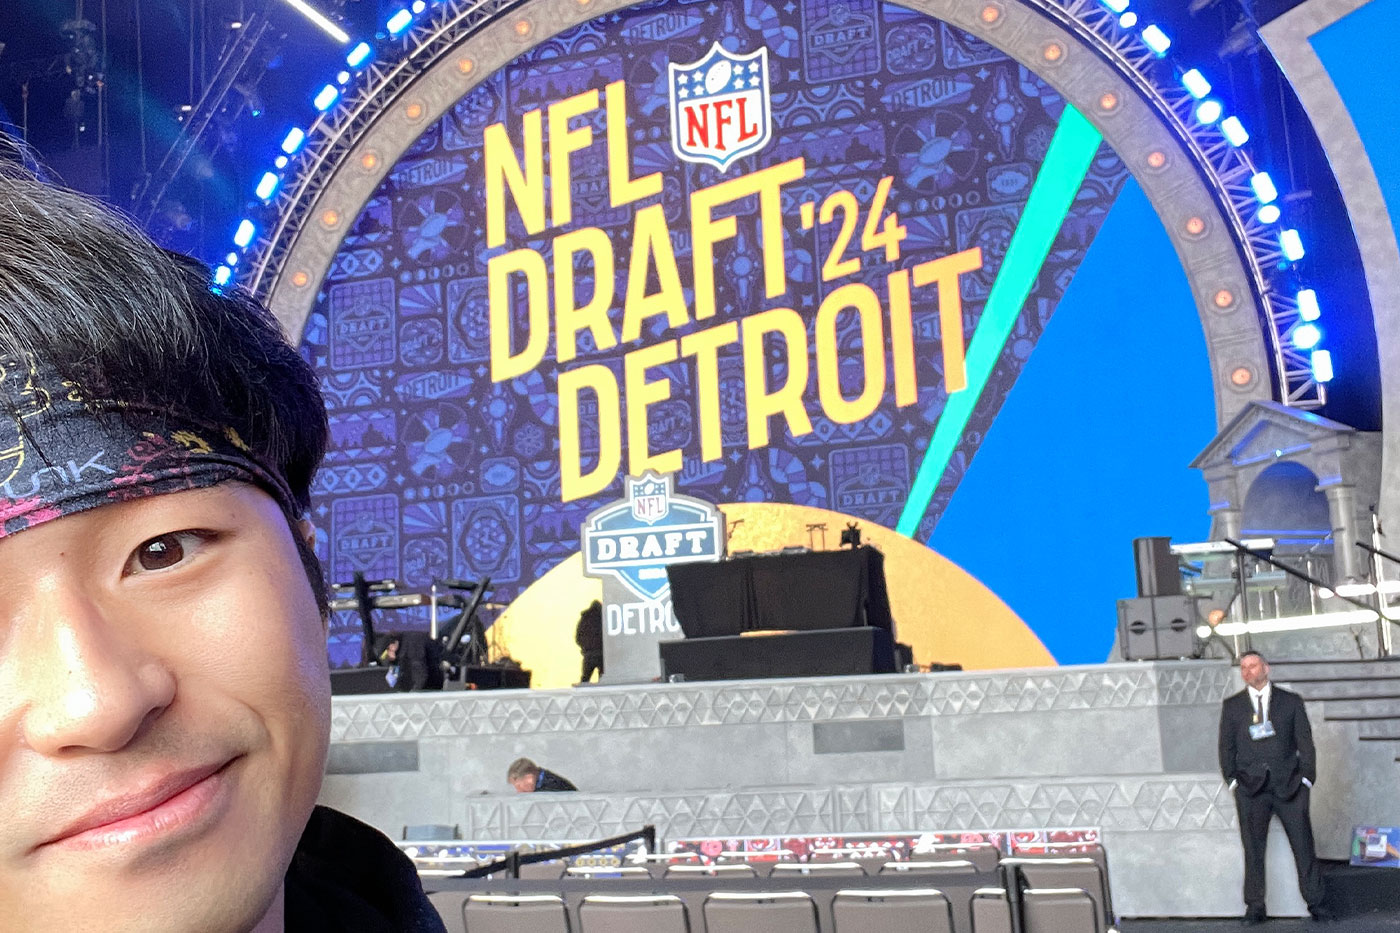 Jay at NFL Draft in Detroit